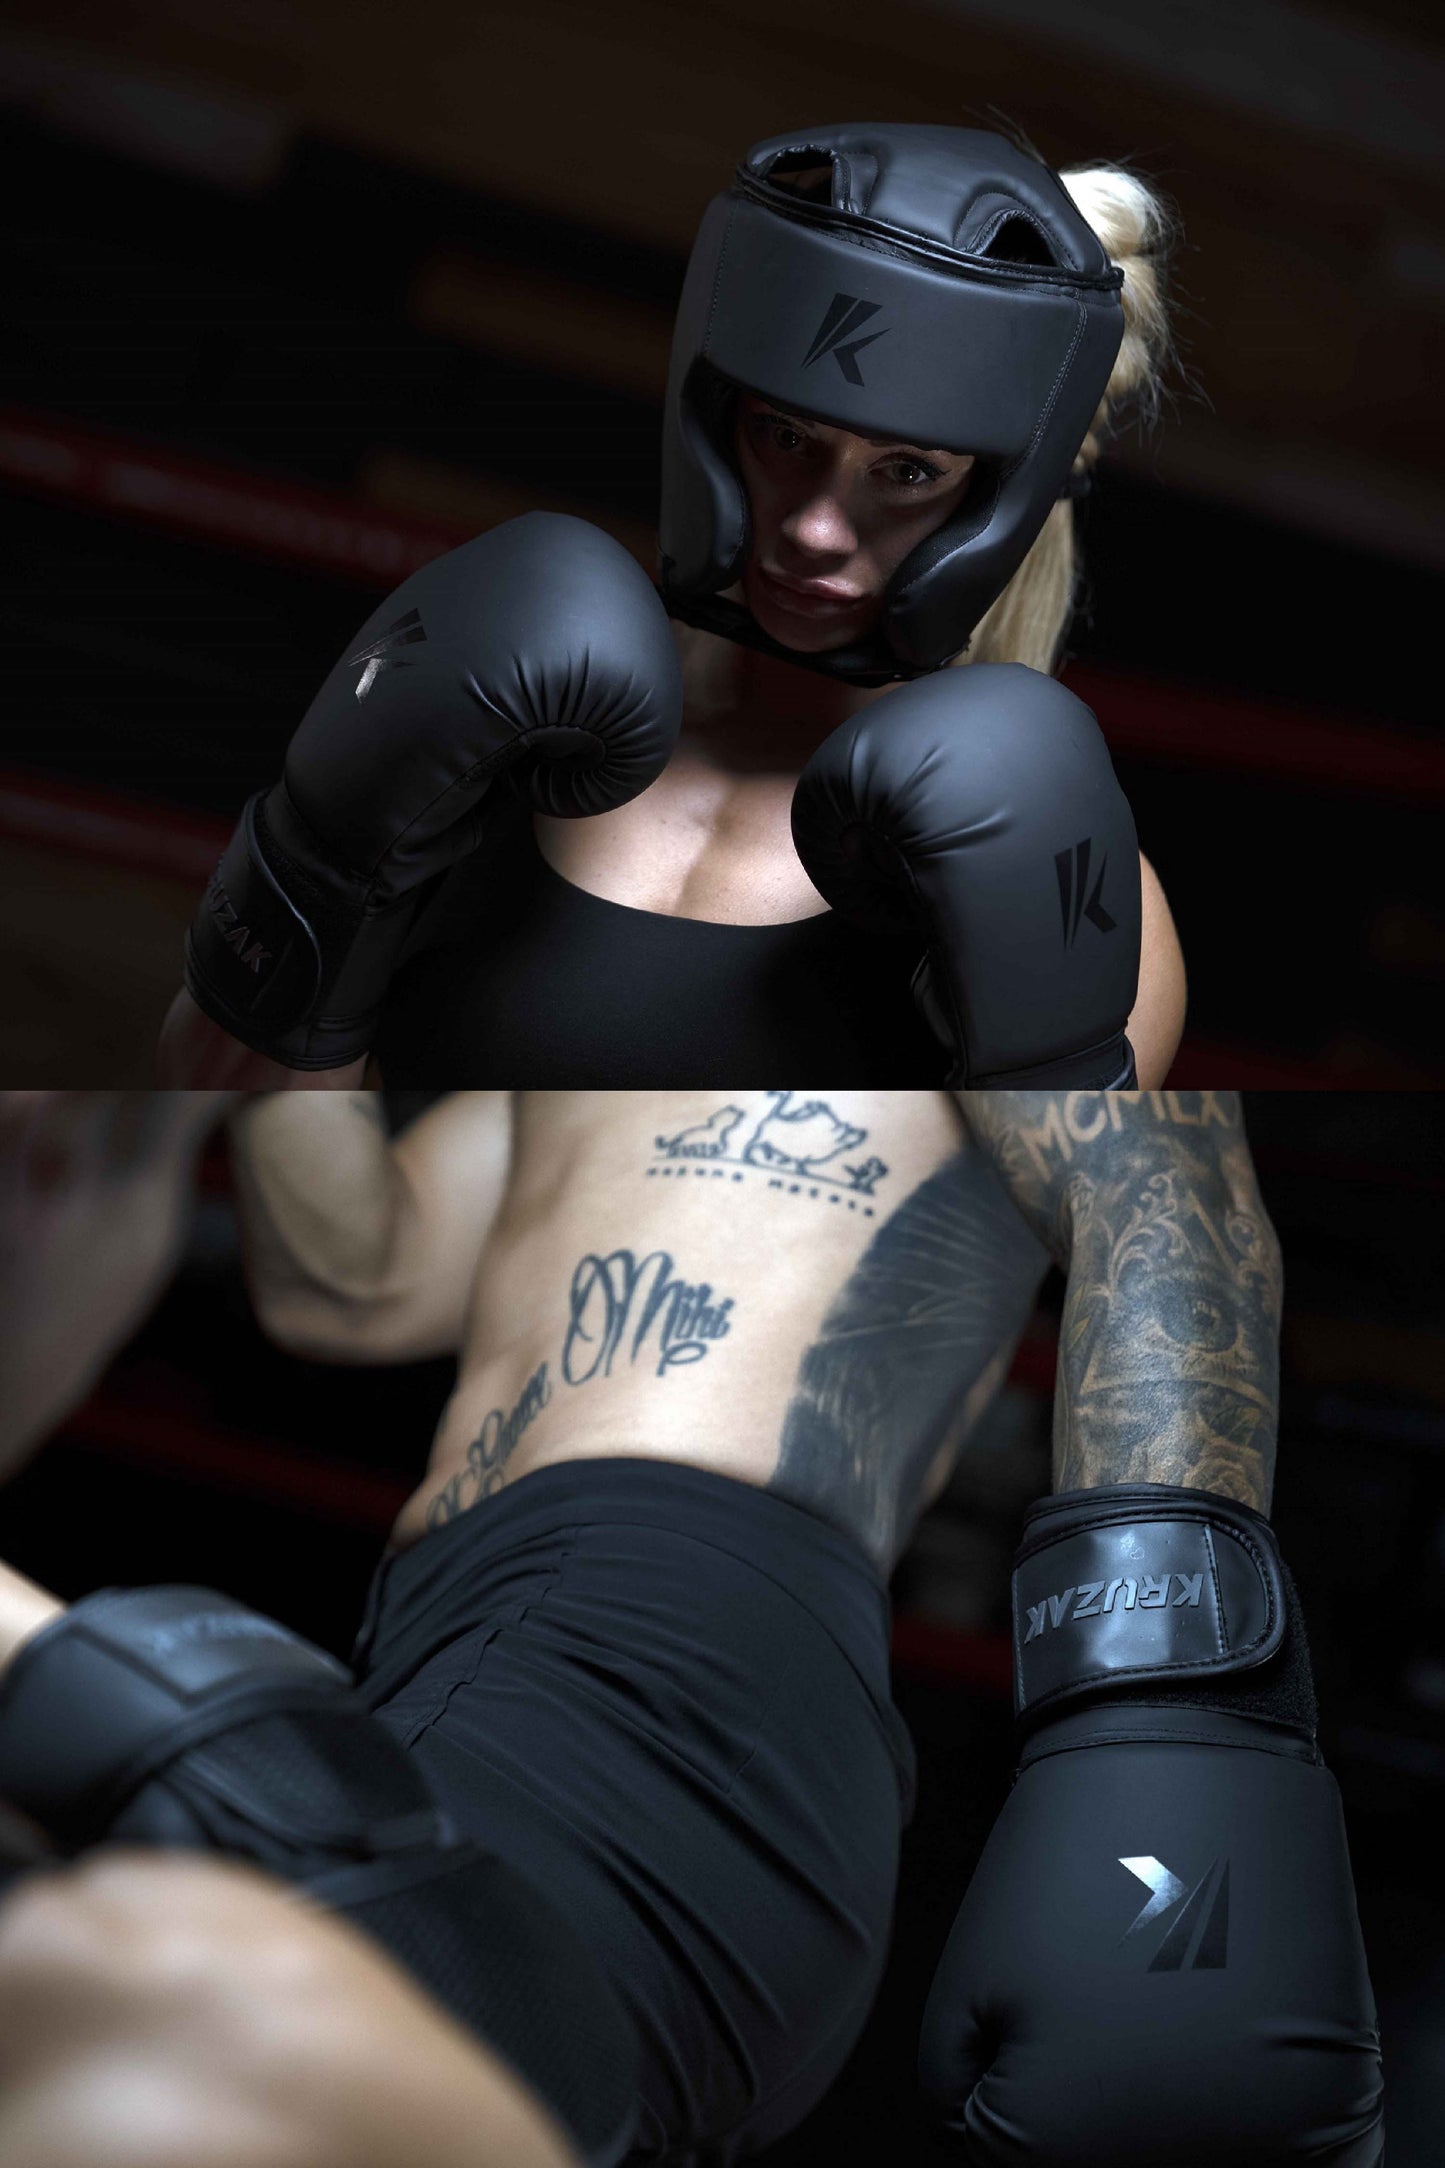 Woman and Man wearing Kruzak Matte Black Boxing Gloves